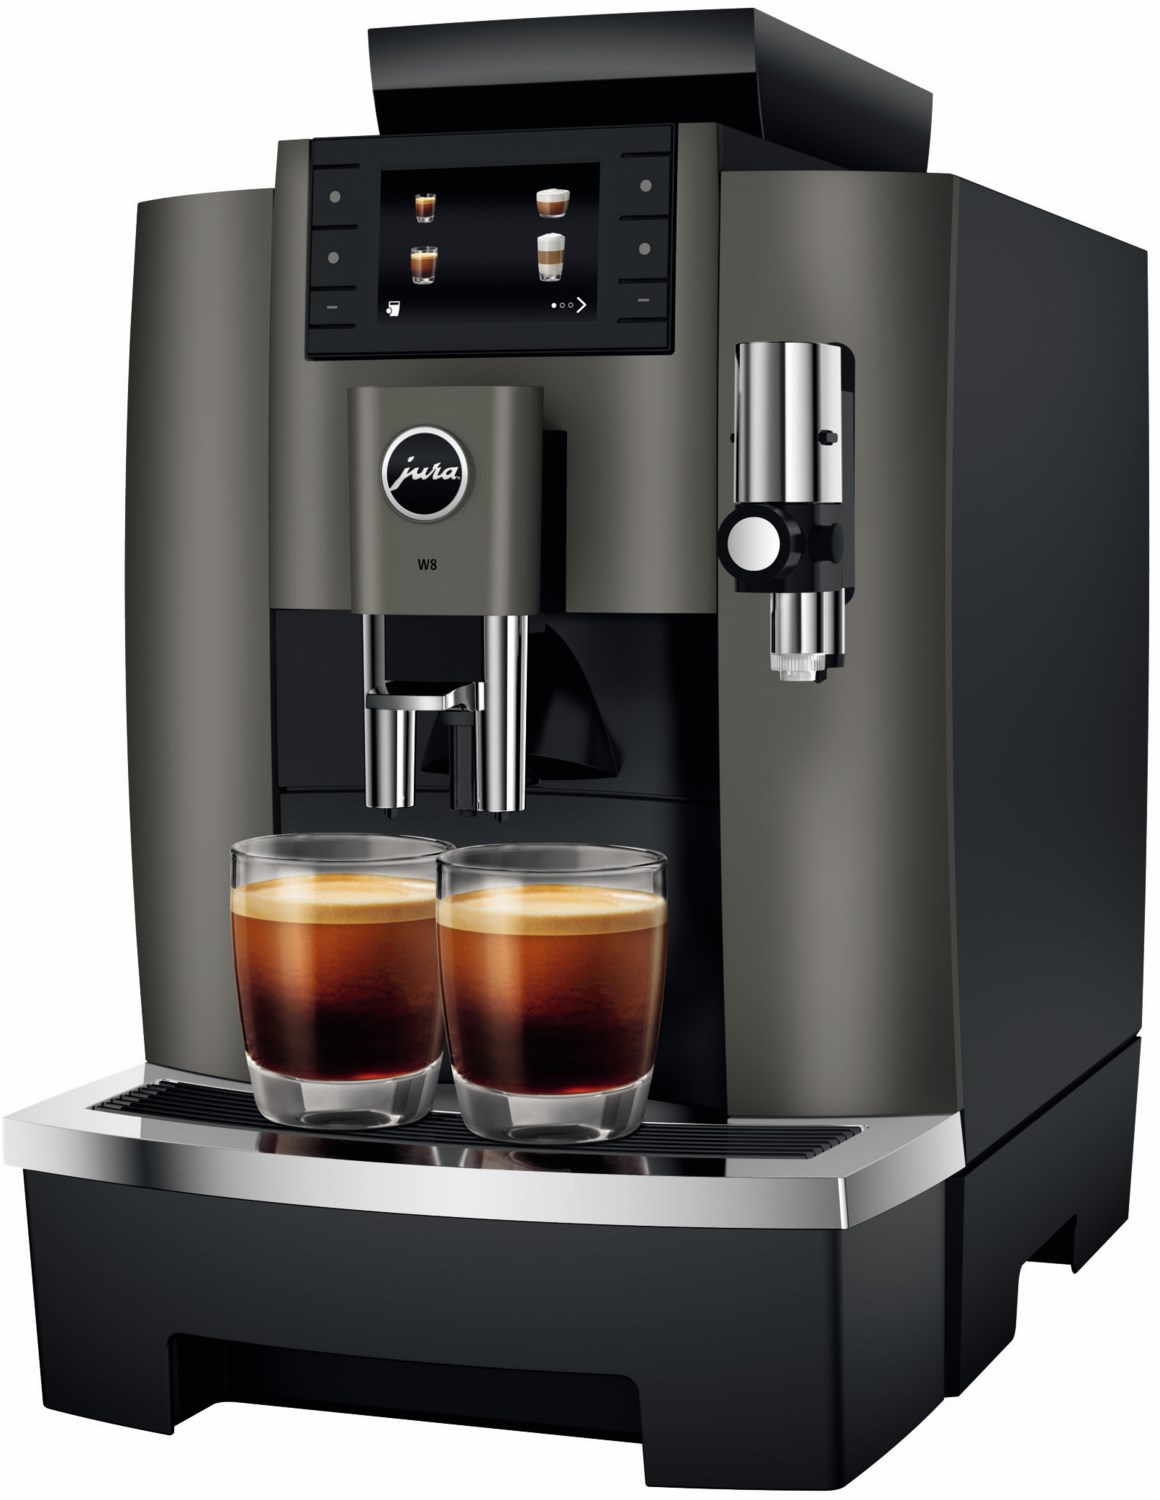 W8 Kaffee-Vollautomat Dark Inox (EA) von Jura